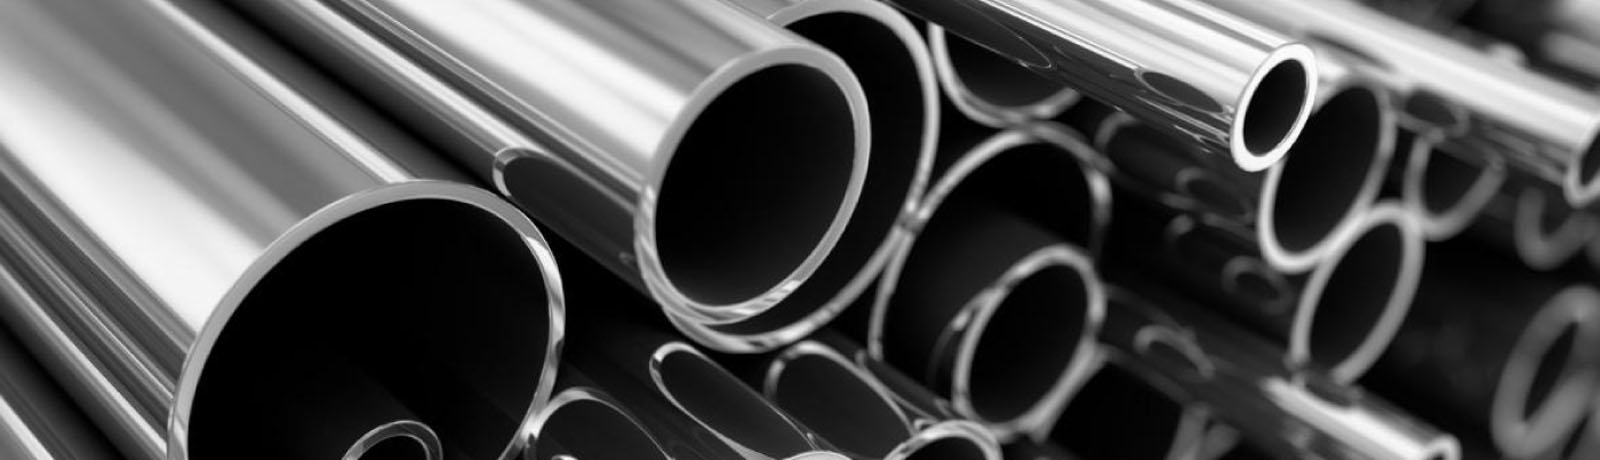 MTSCO-Stainless Steel Pipe/Tube, Fittings